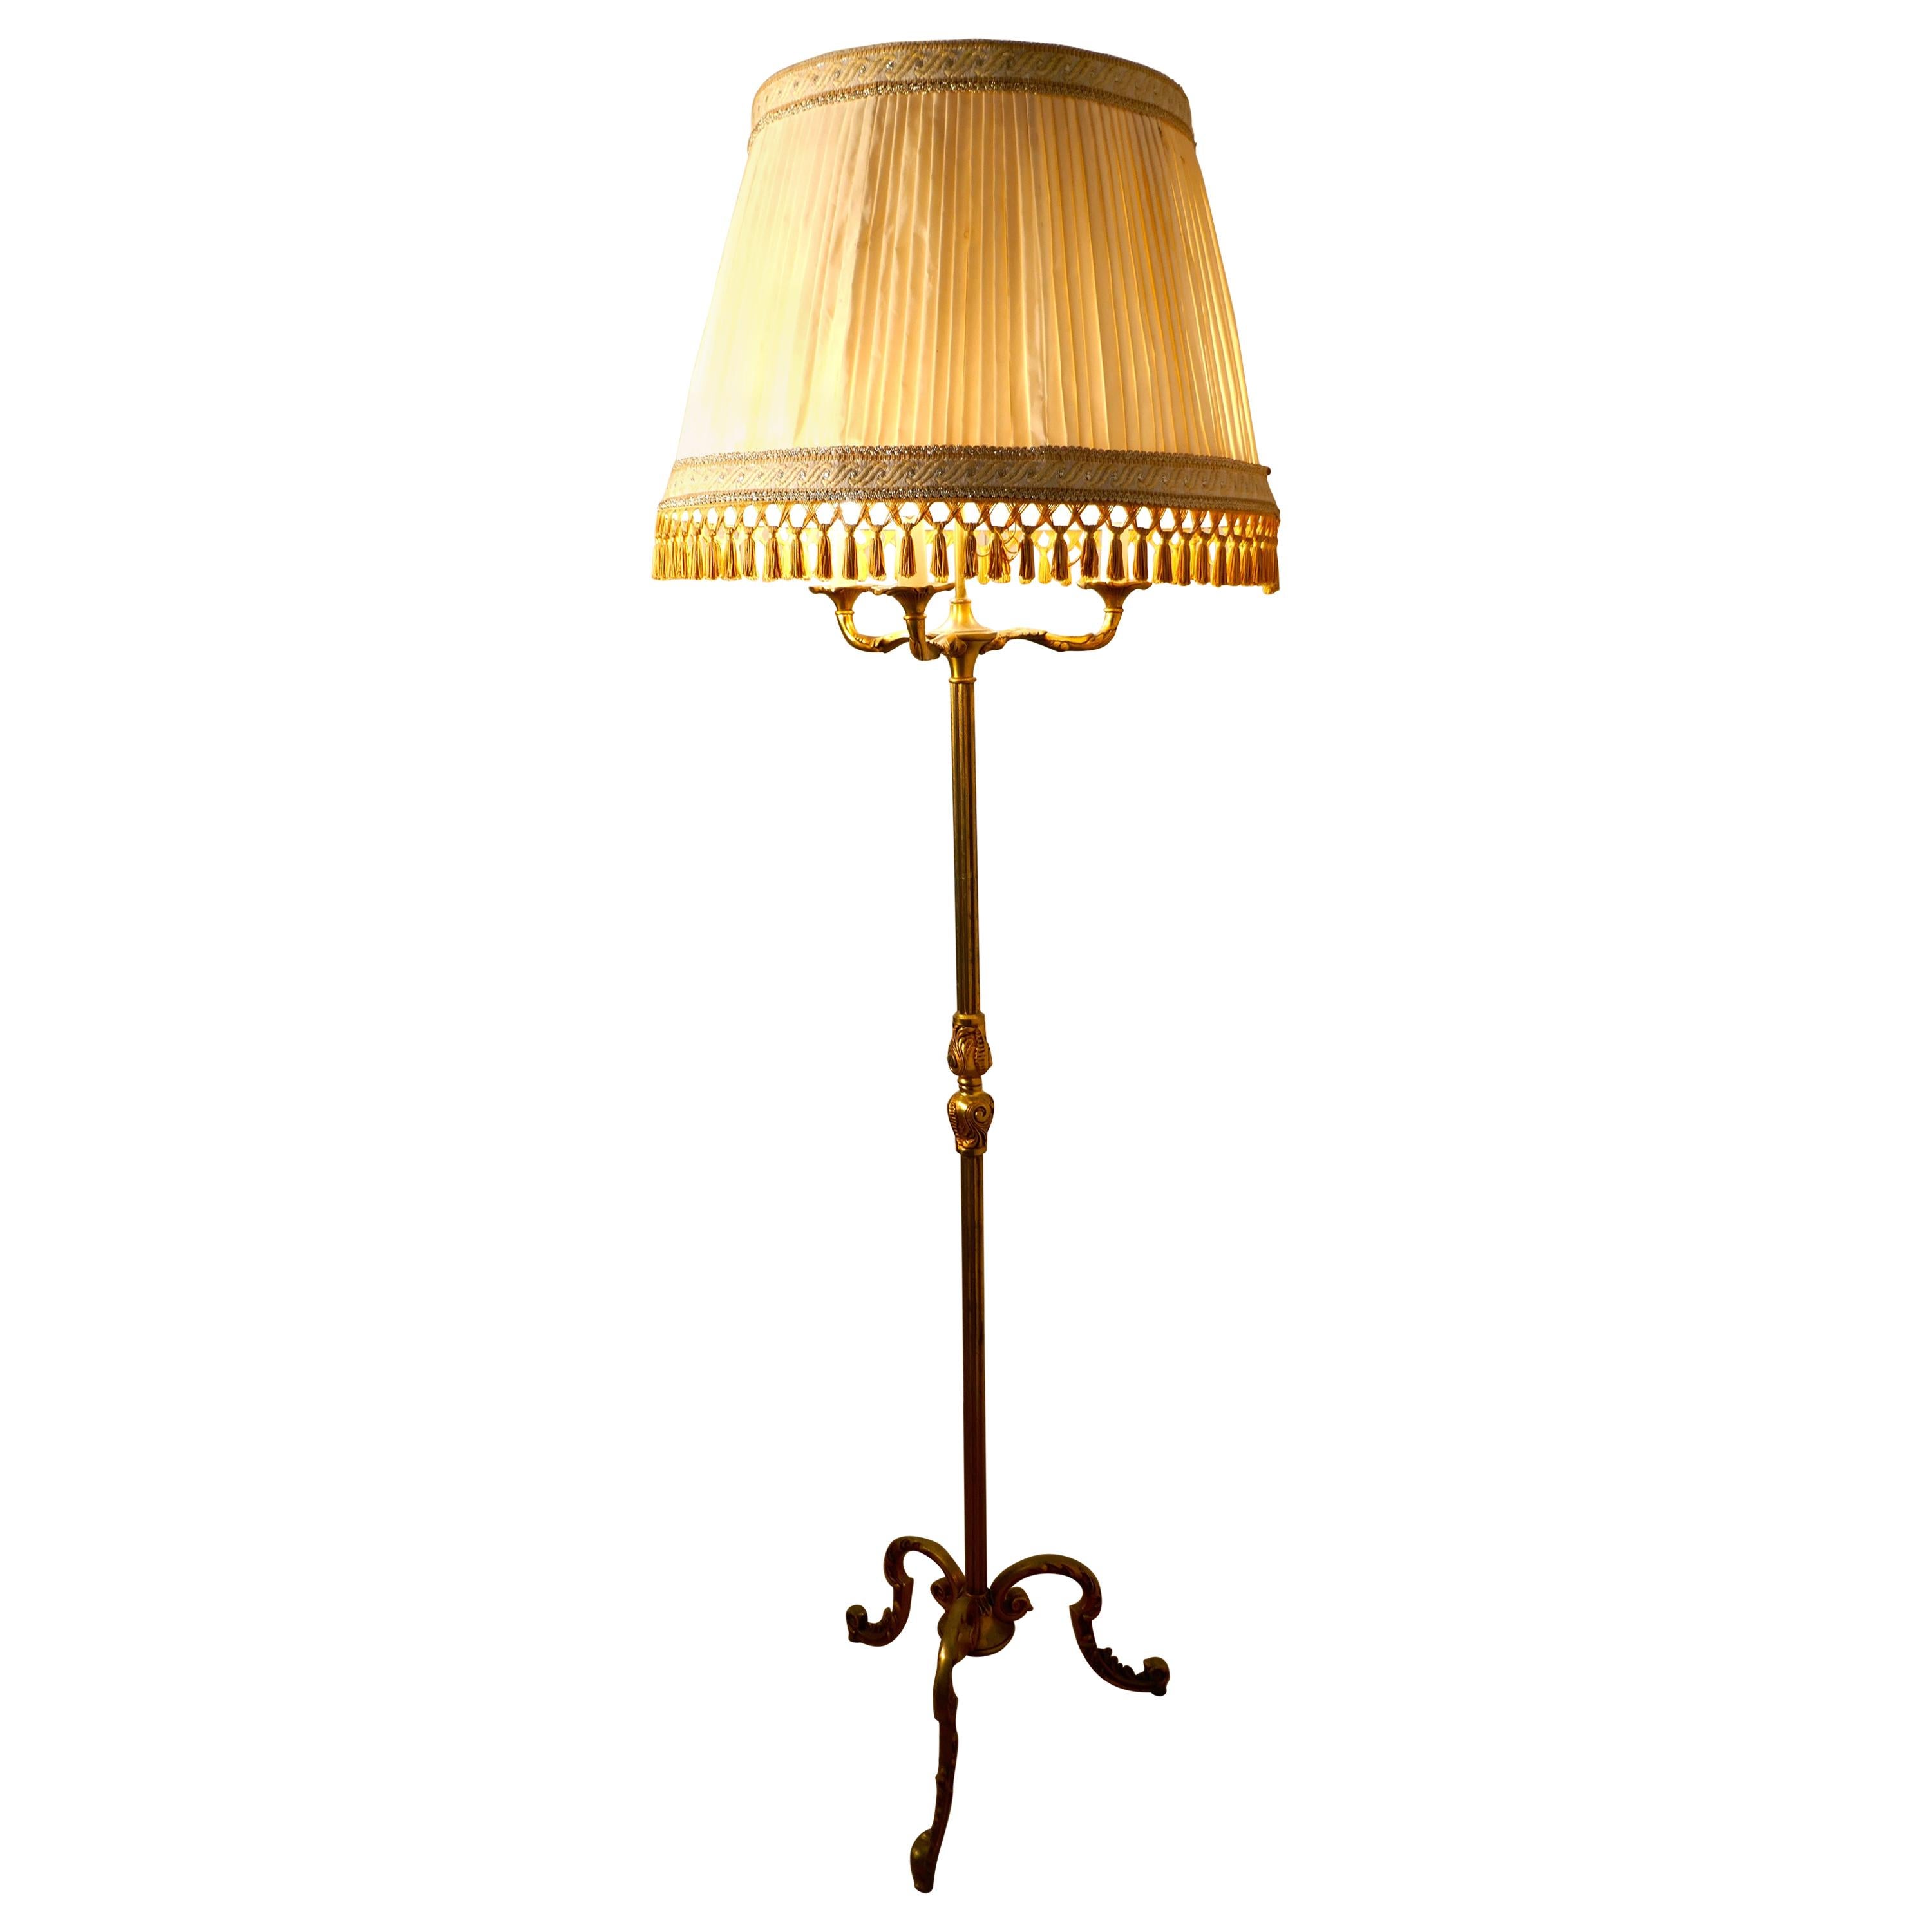 French Brass Arts & Crafts Floor Lamp, Regency Style Standard Lamp